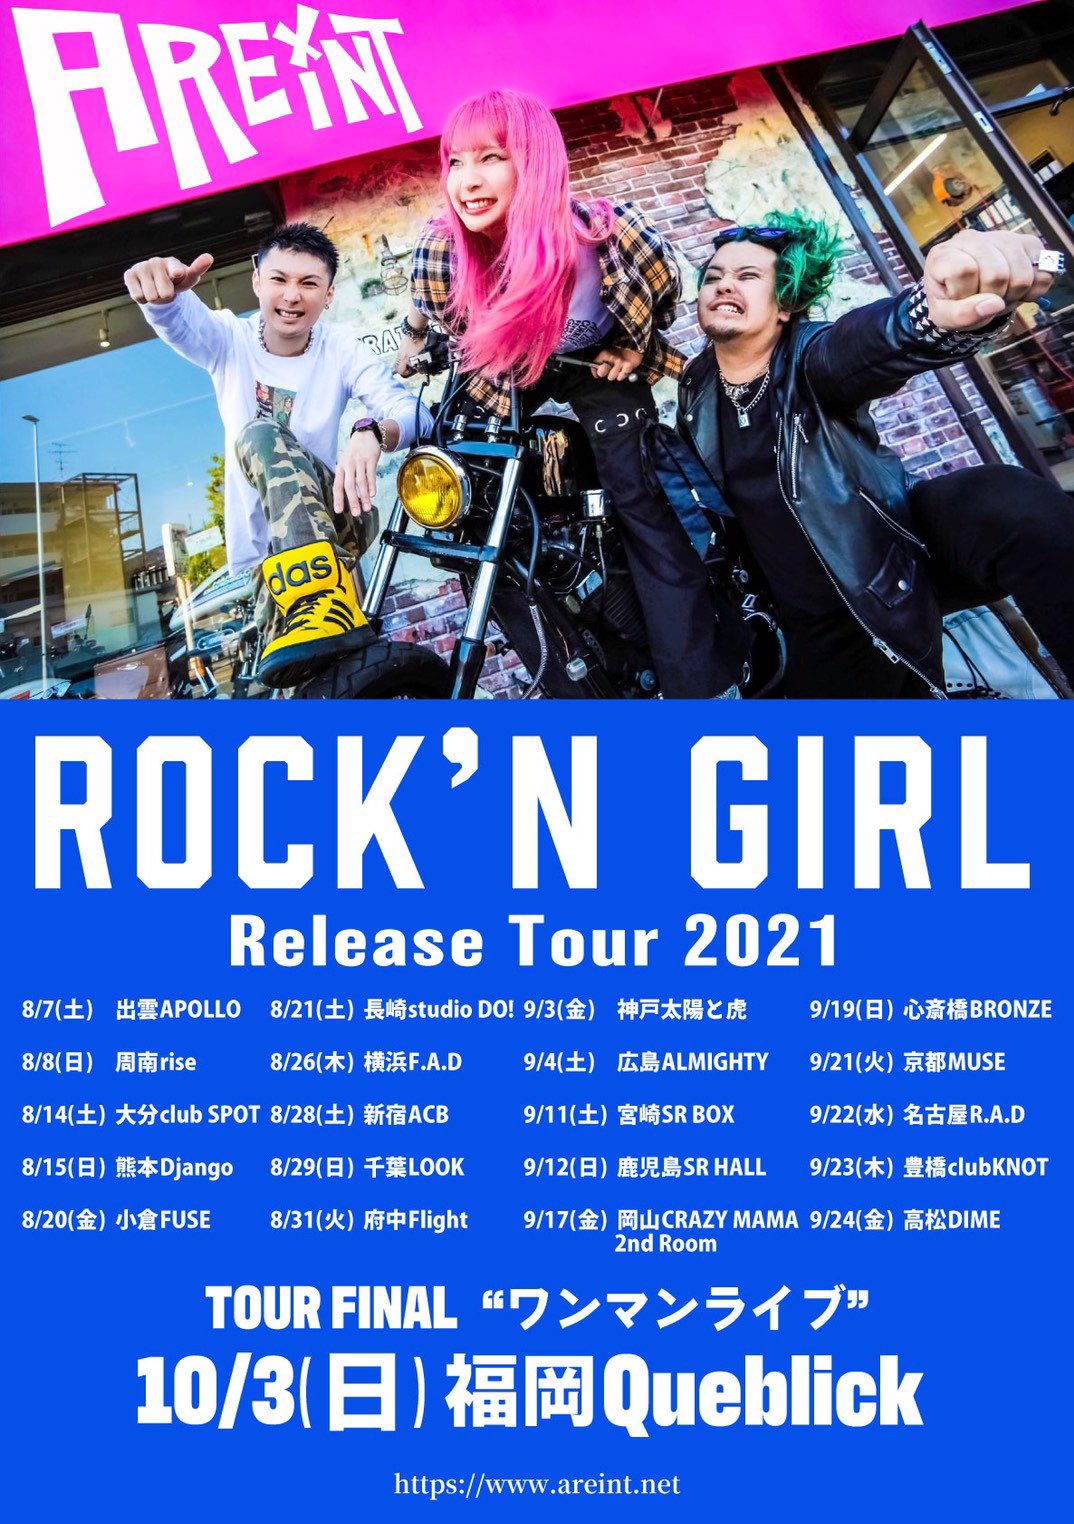 AREINT "ROCK'N GIRL Release Tour 2021"